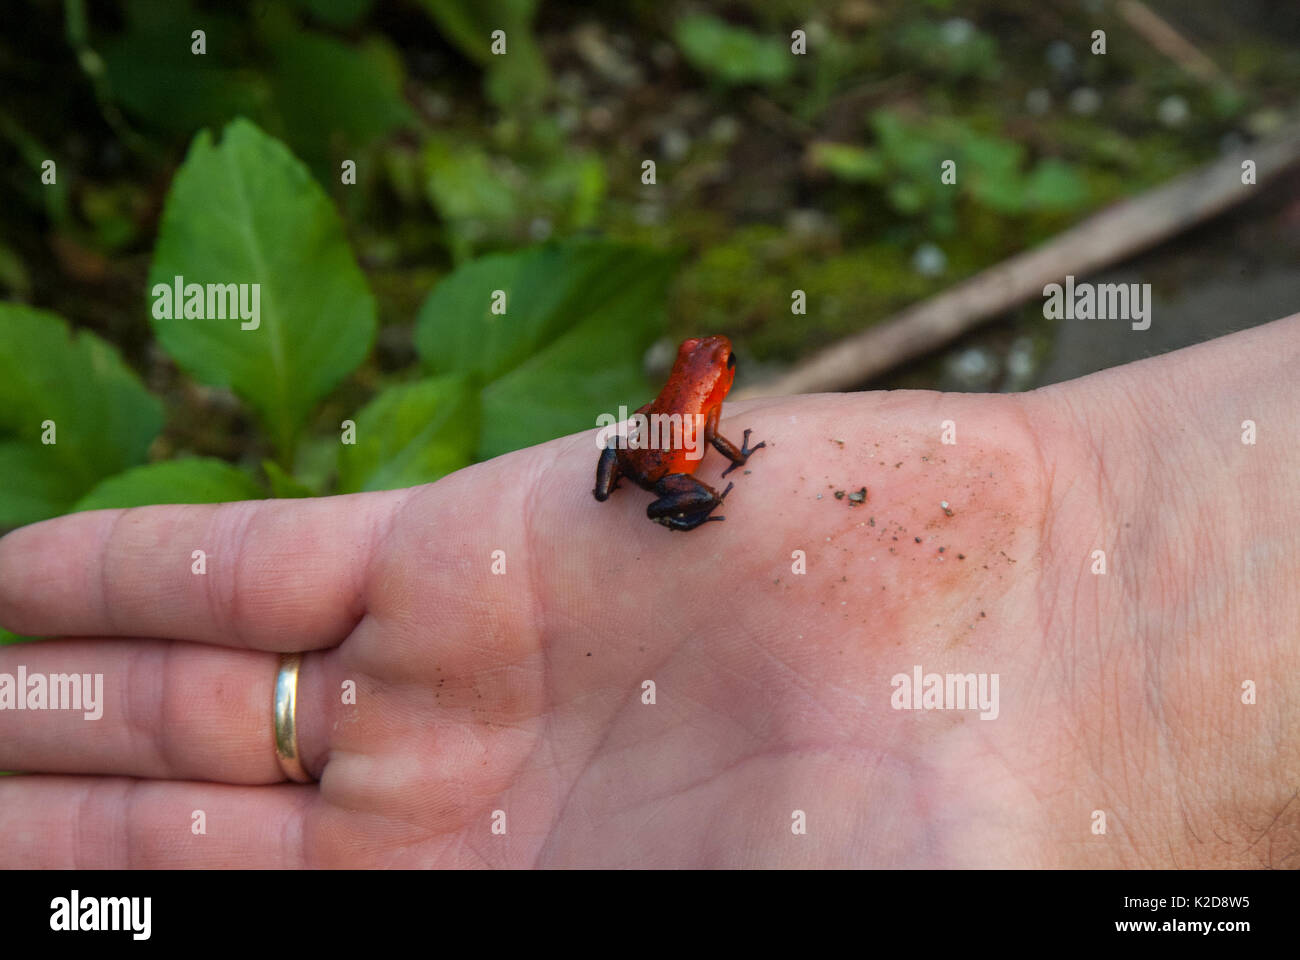 Poison-dart Frog on Hand Stock Photo